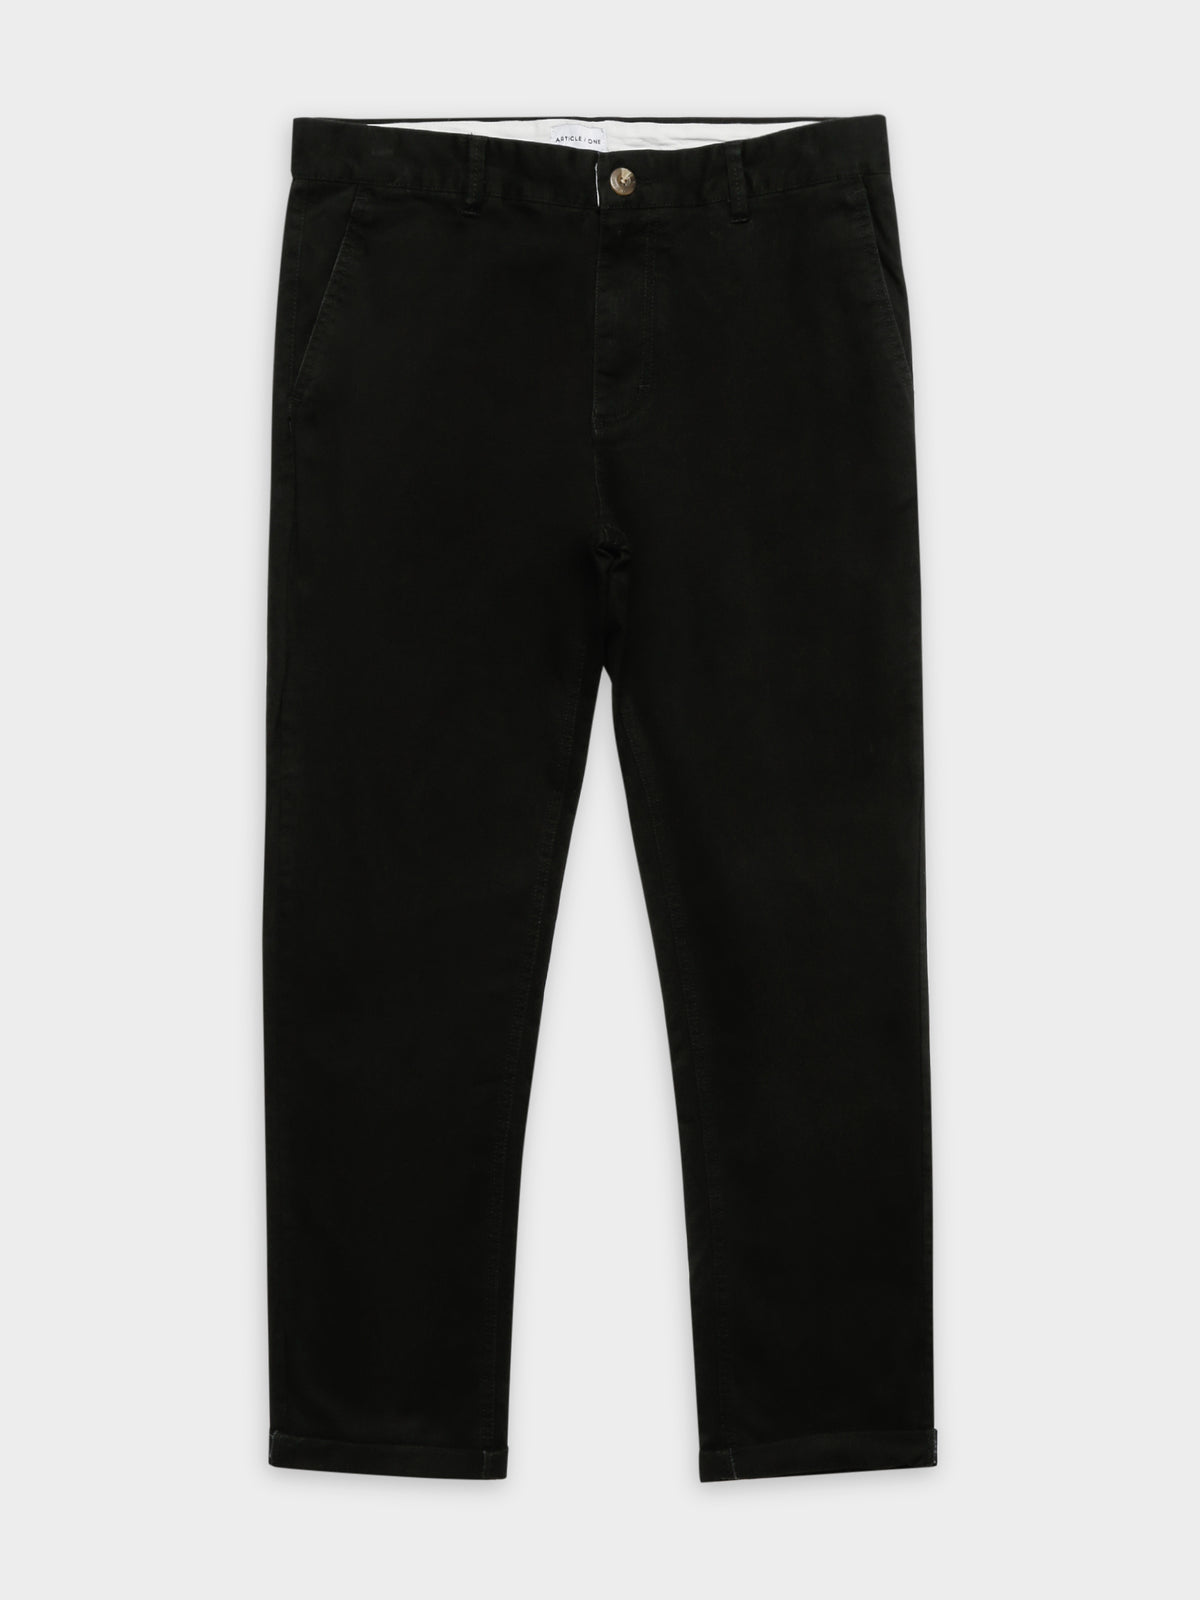 Hunter Chino Pants in Black